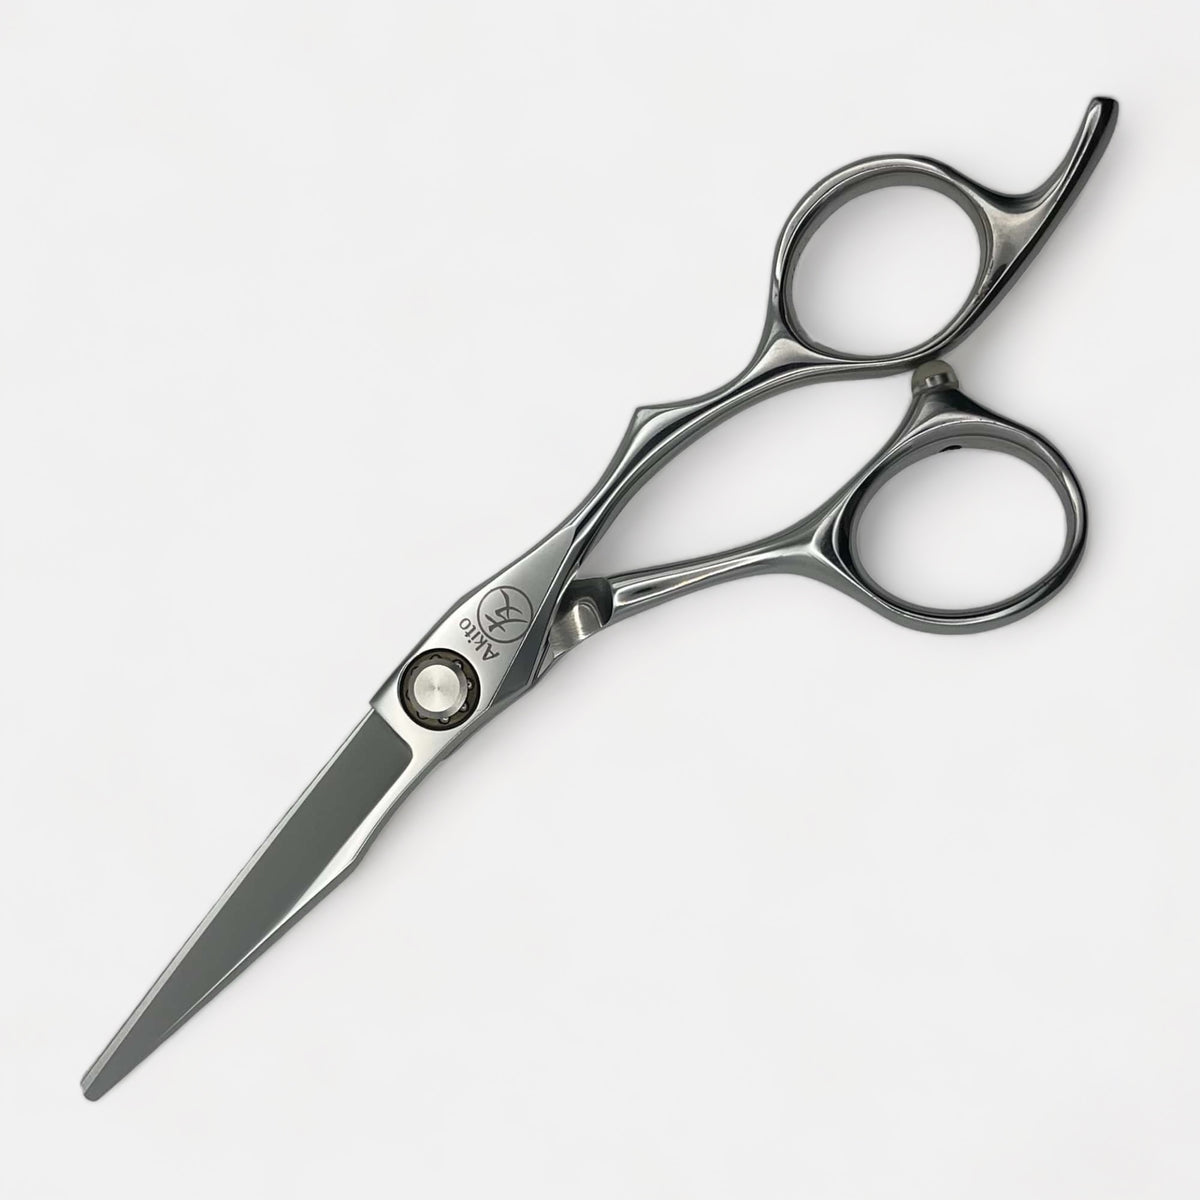 Kaito Professional Hairdresser Scissors in 5.5